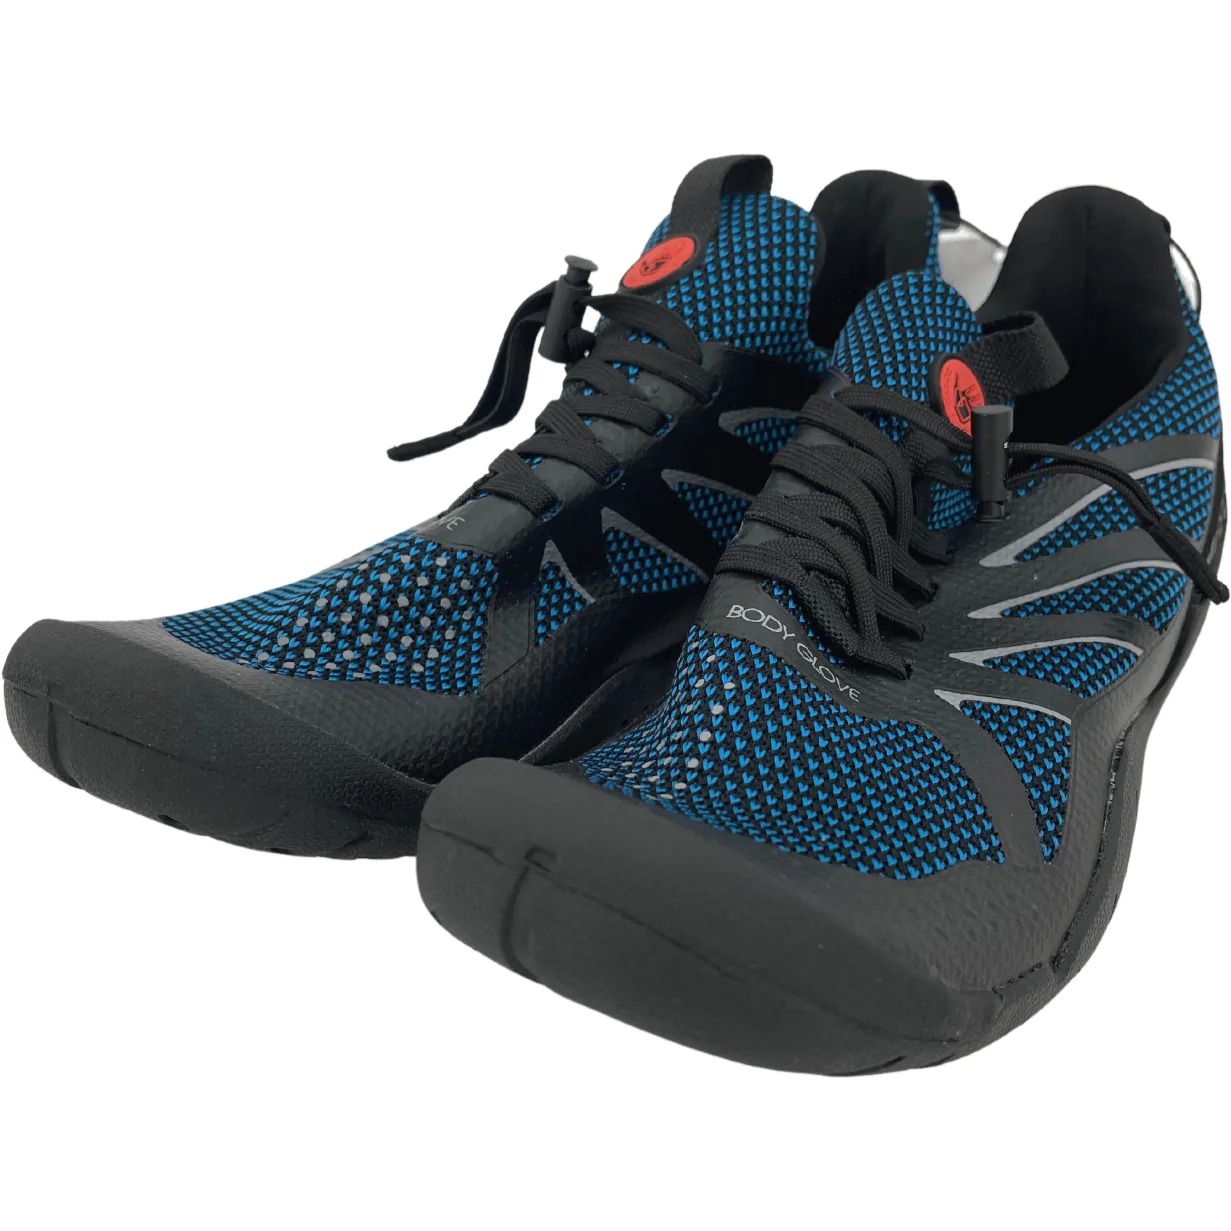 Body Glove Men's Water Shoes / Hydra / Black & Royal Blue / Size 8